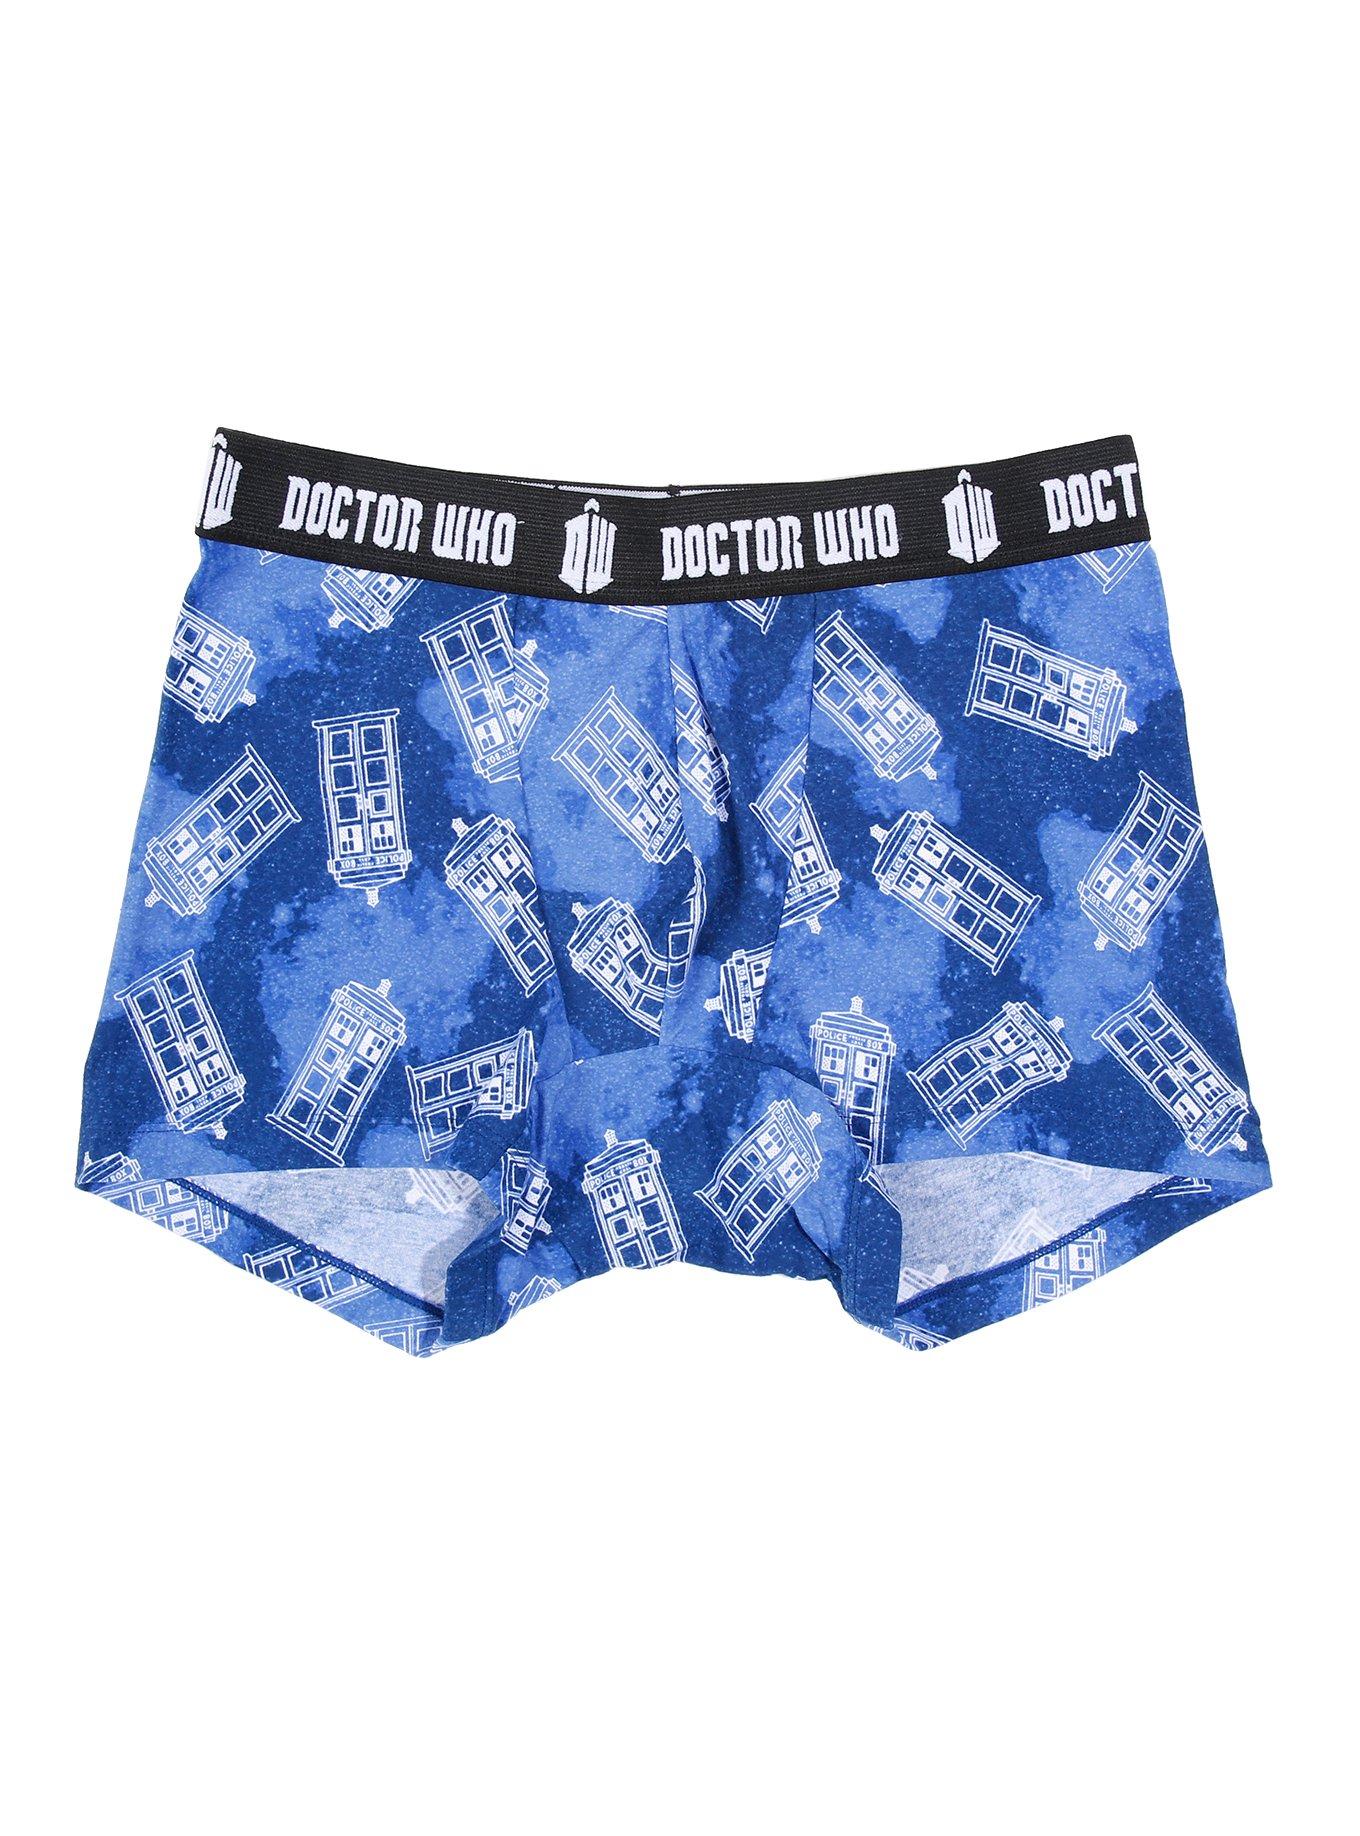 Dr. Who TARDIS Galaxy Boxer Briefs, MULTI, hi-res